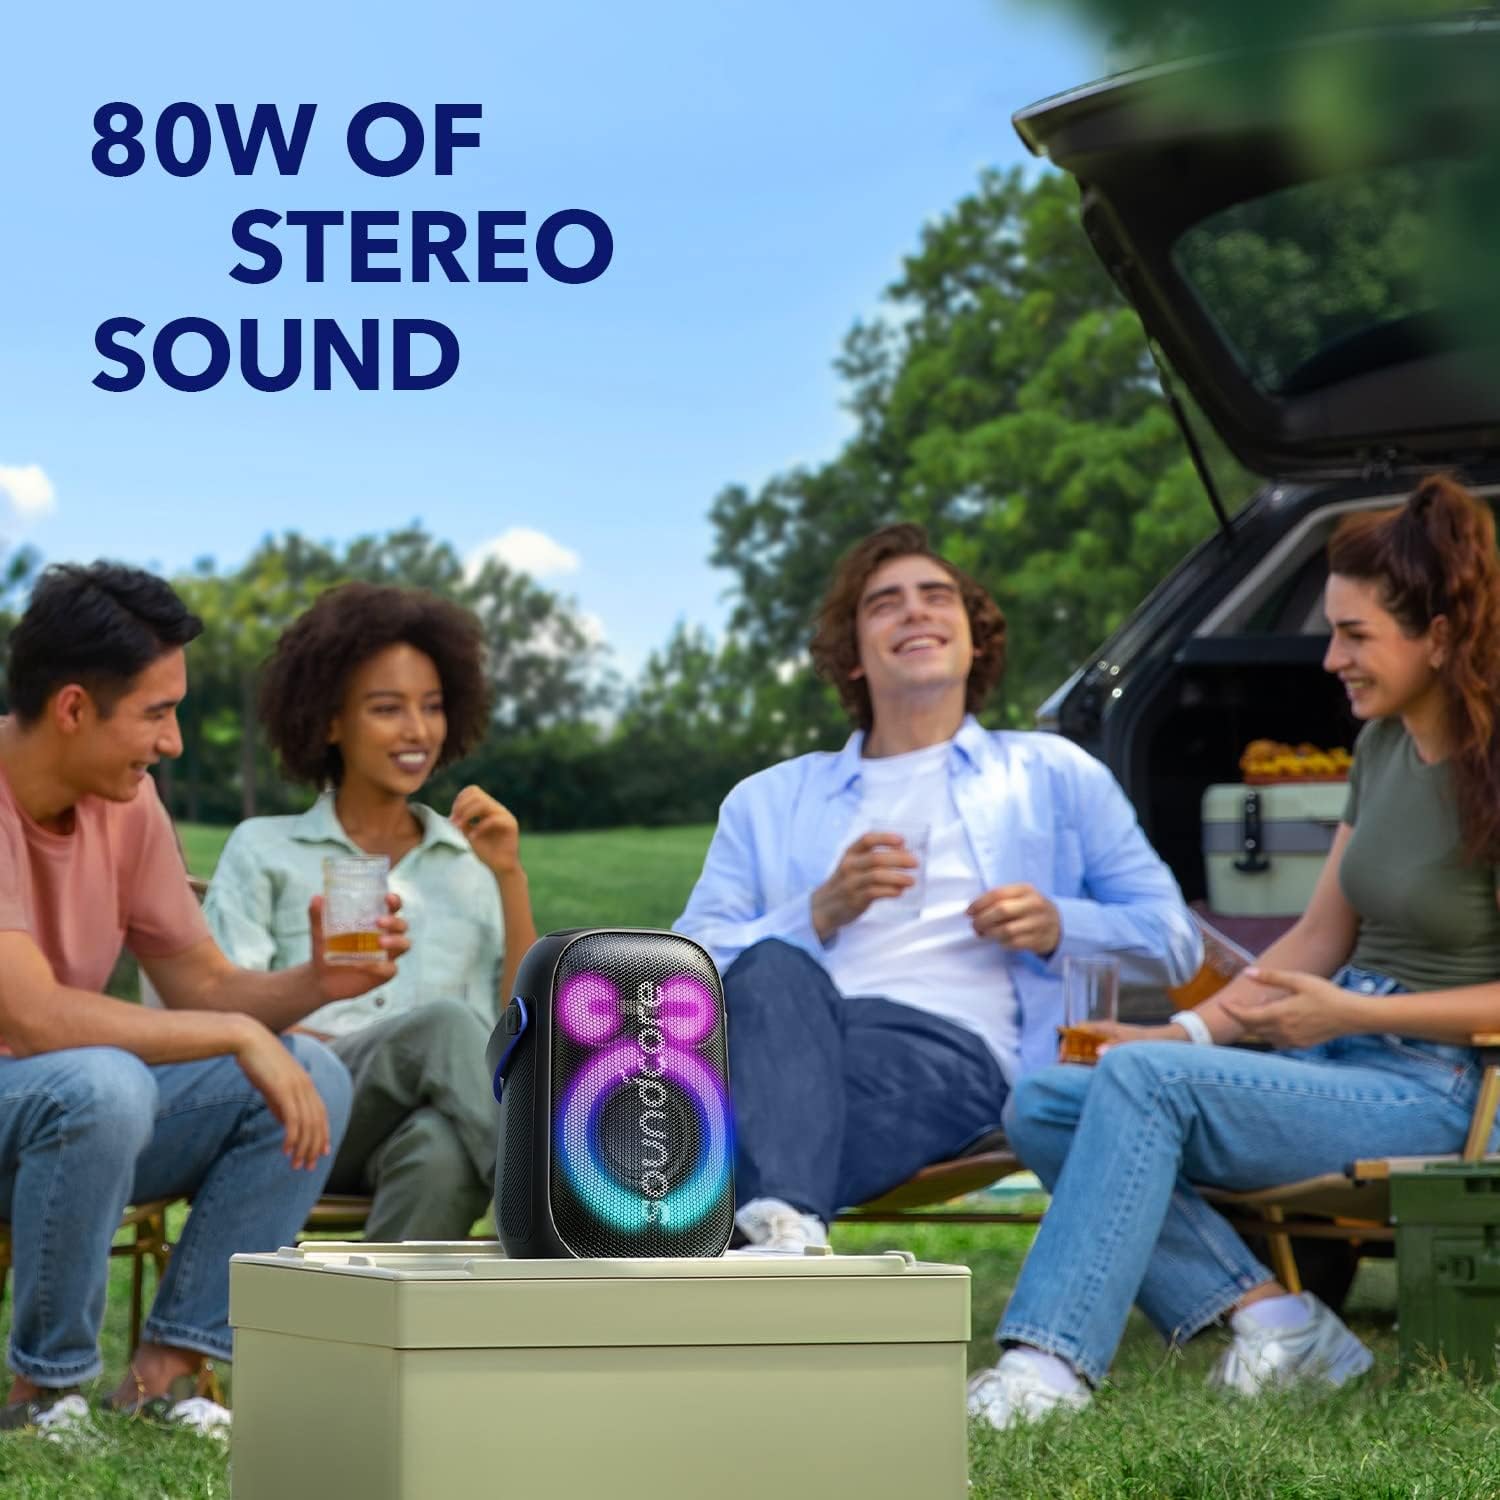 Anker SoundCore Rave Neo 2 Portable Bluetooth Speaker Black